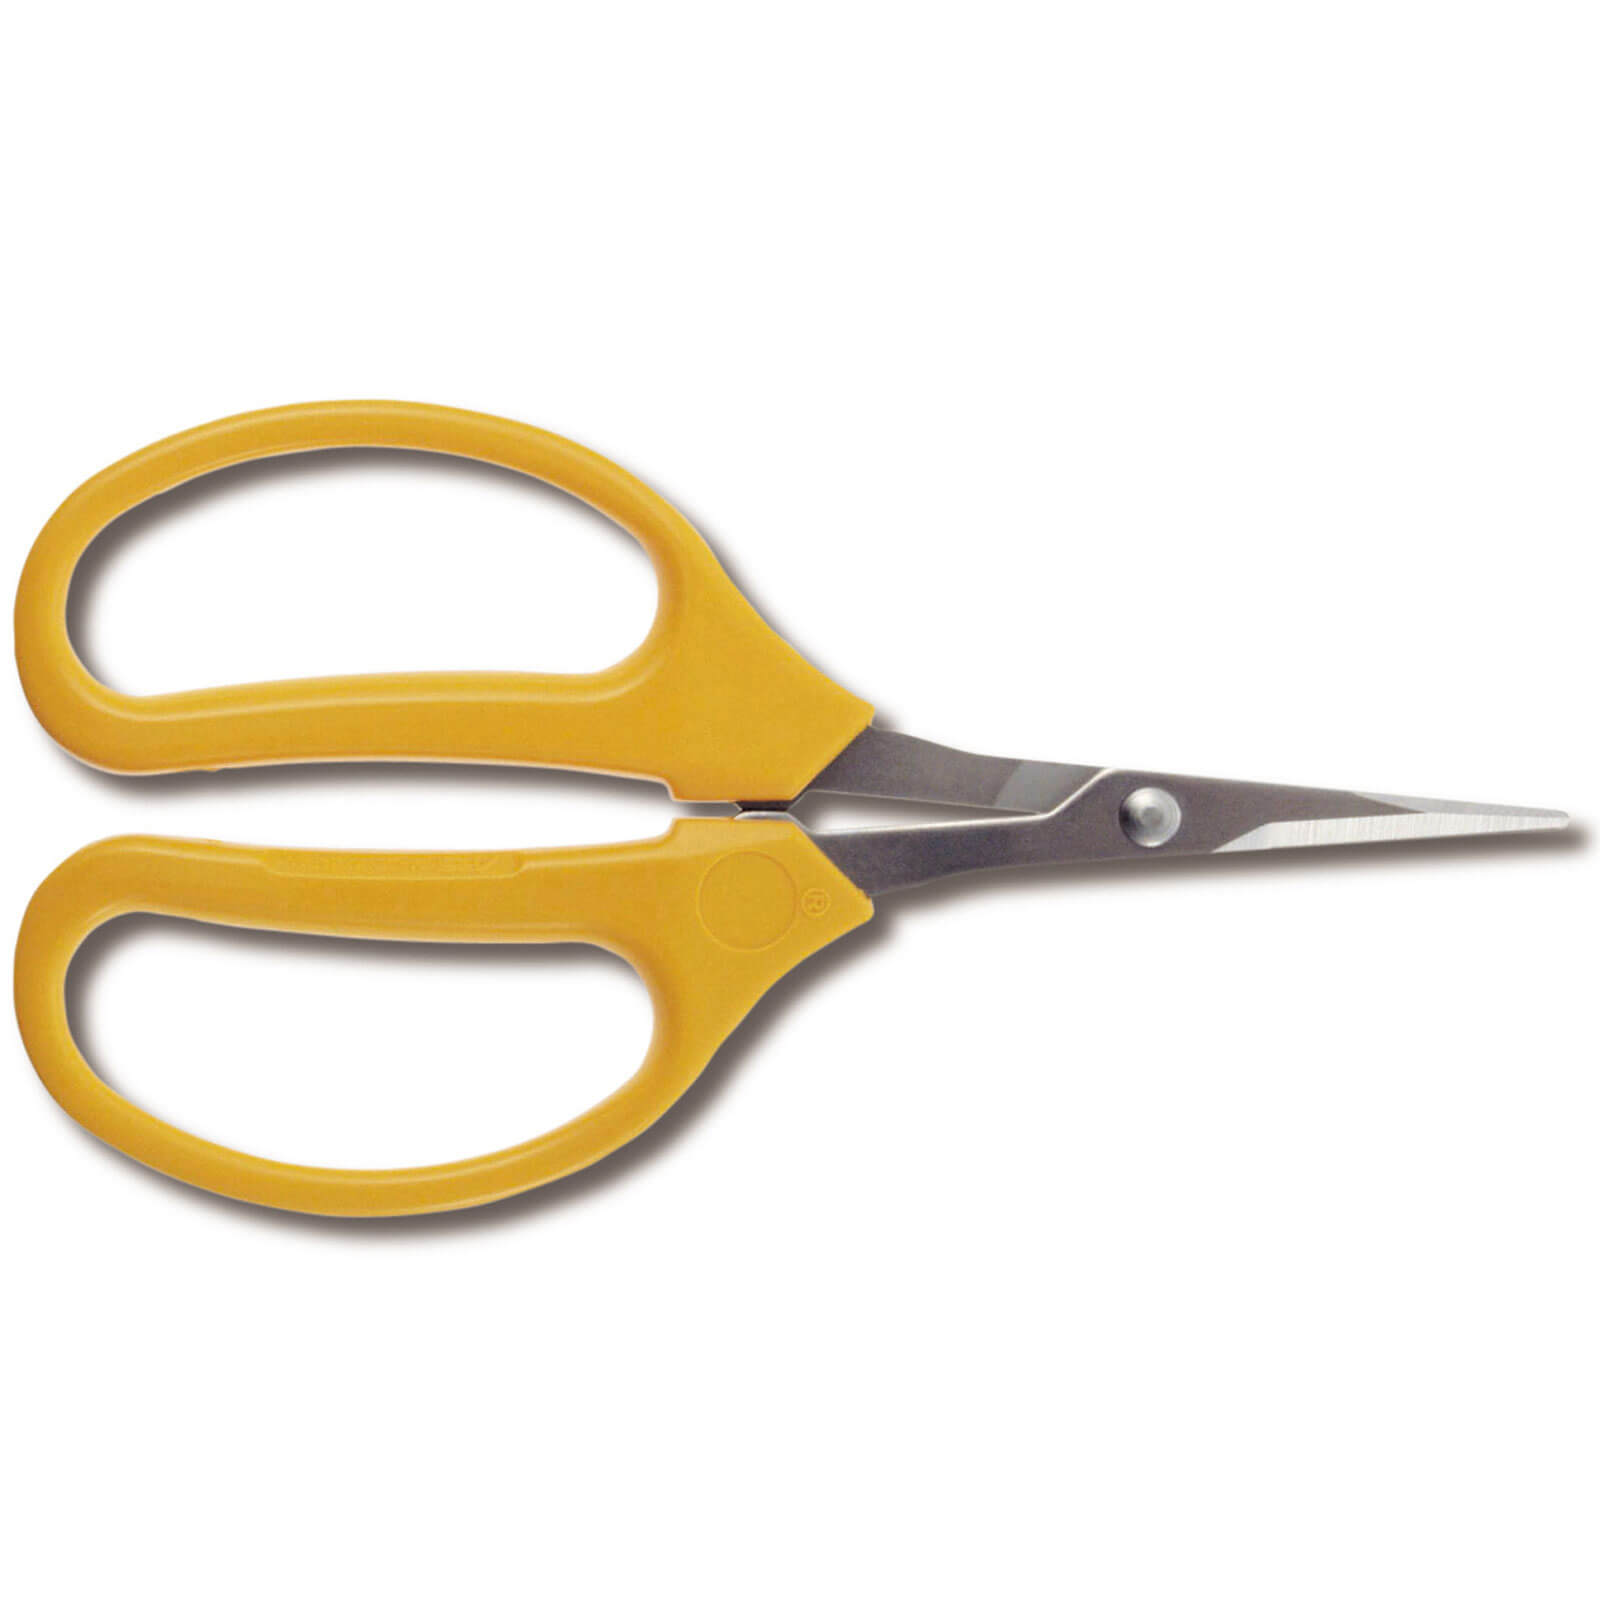 Image of ARS 320 Straight Stainless Steel Fruit Pruner Scissors